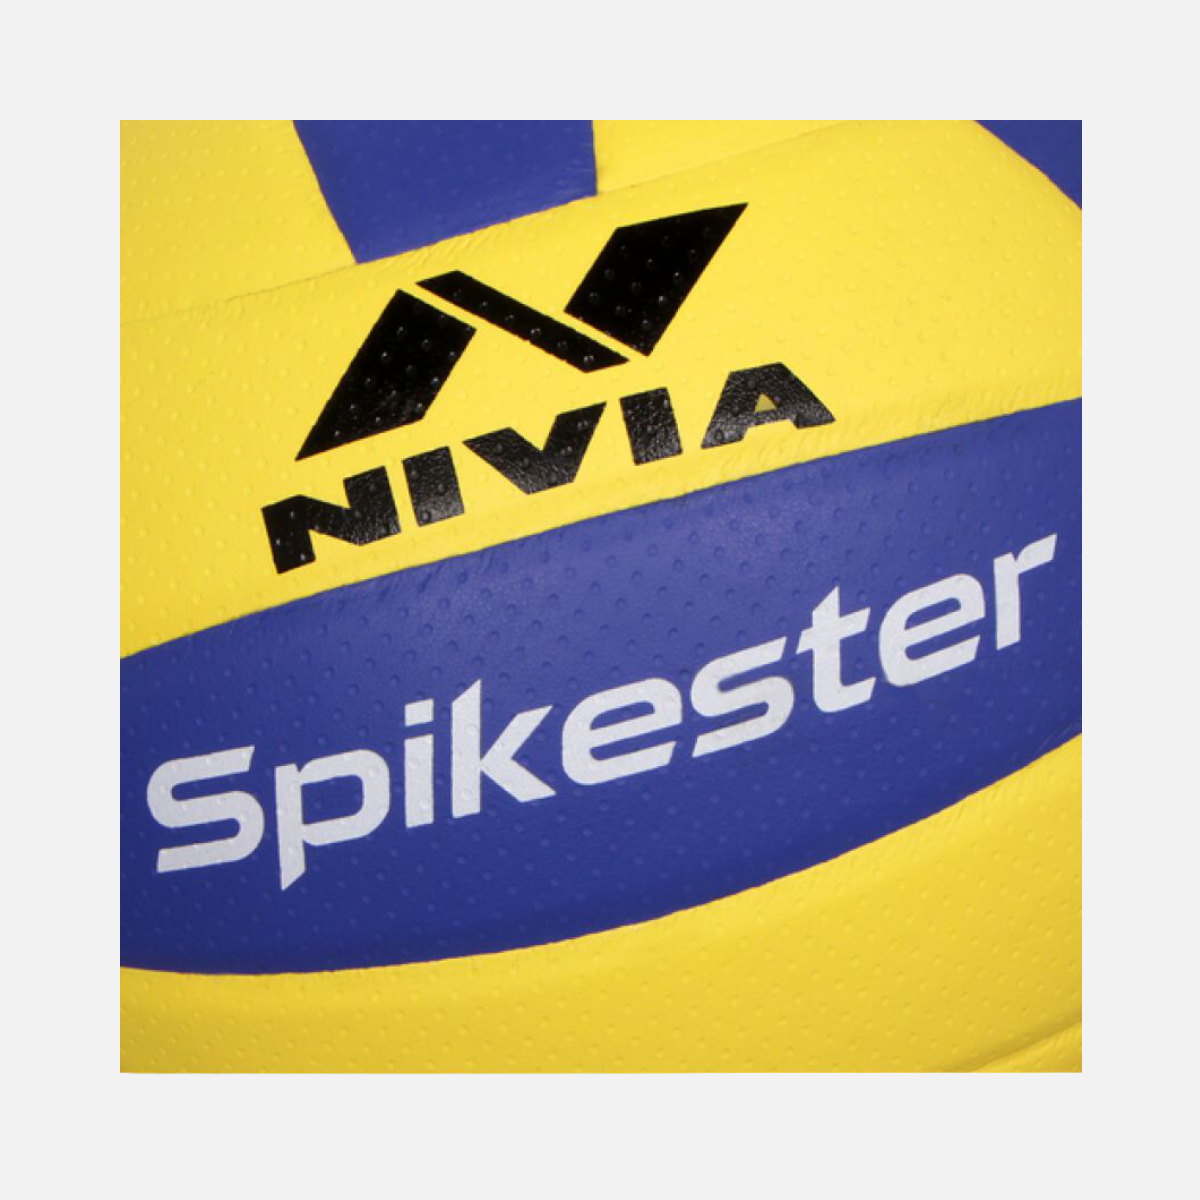 Nivia Spikester Volley Ball -Yellow/Blue